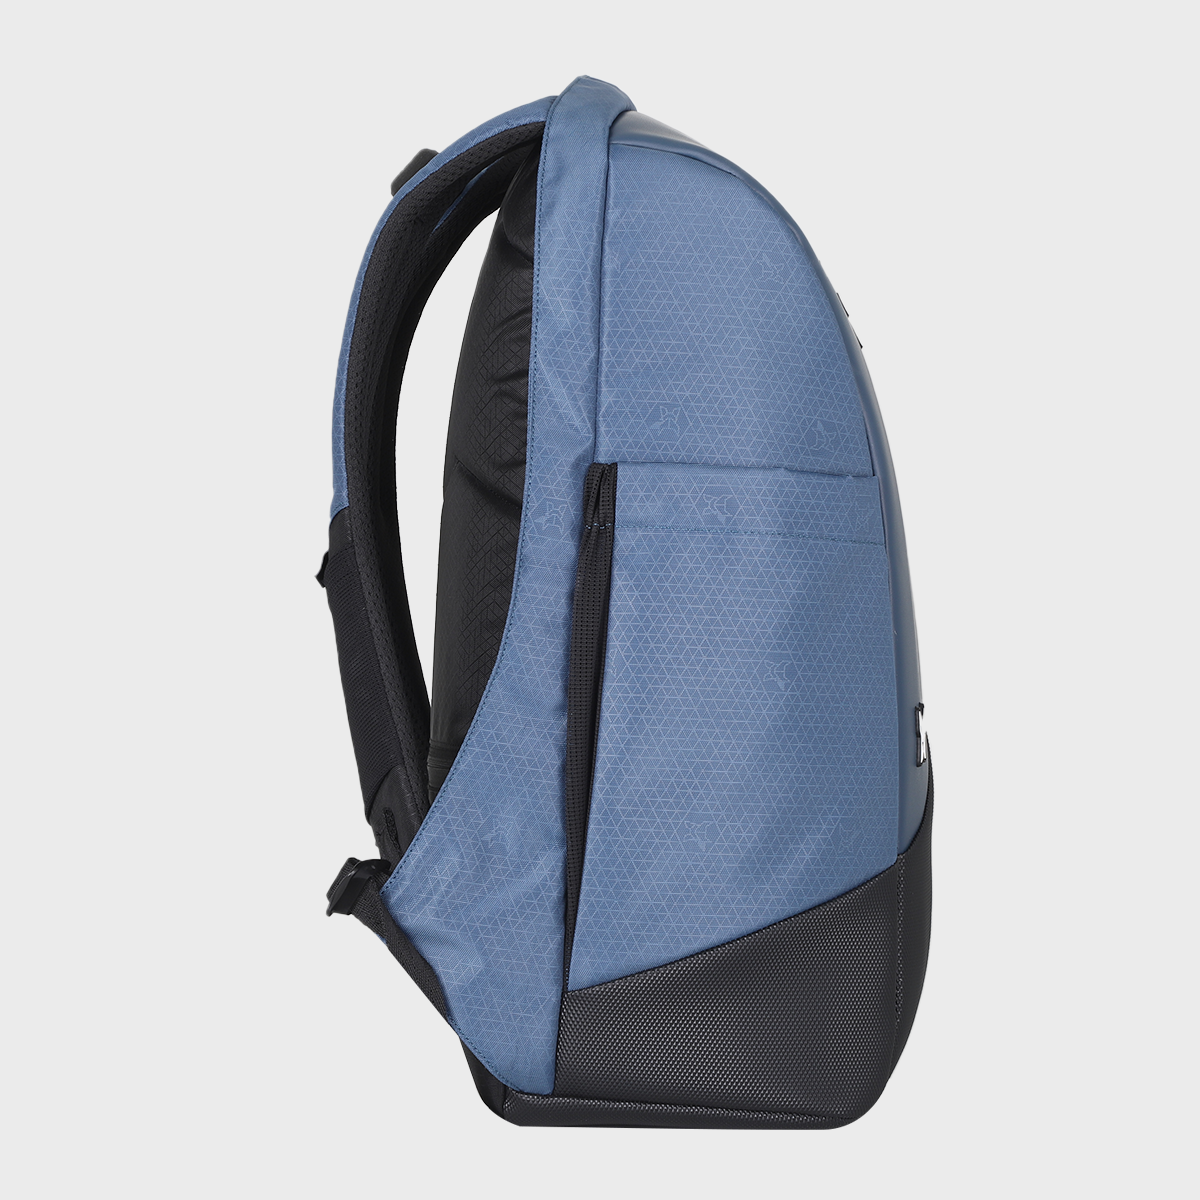 Arctic Fox Classic Backpack For Kids And Women 7L/16L/20L Canvas School Bag  With Waterproof Swedish Design From Jgllshop, $17.12 | DHgate.Com